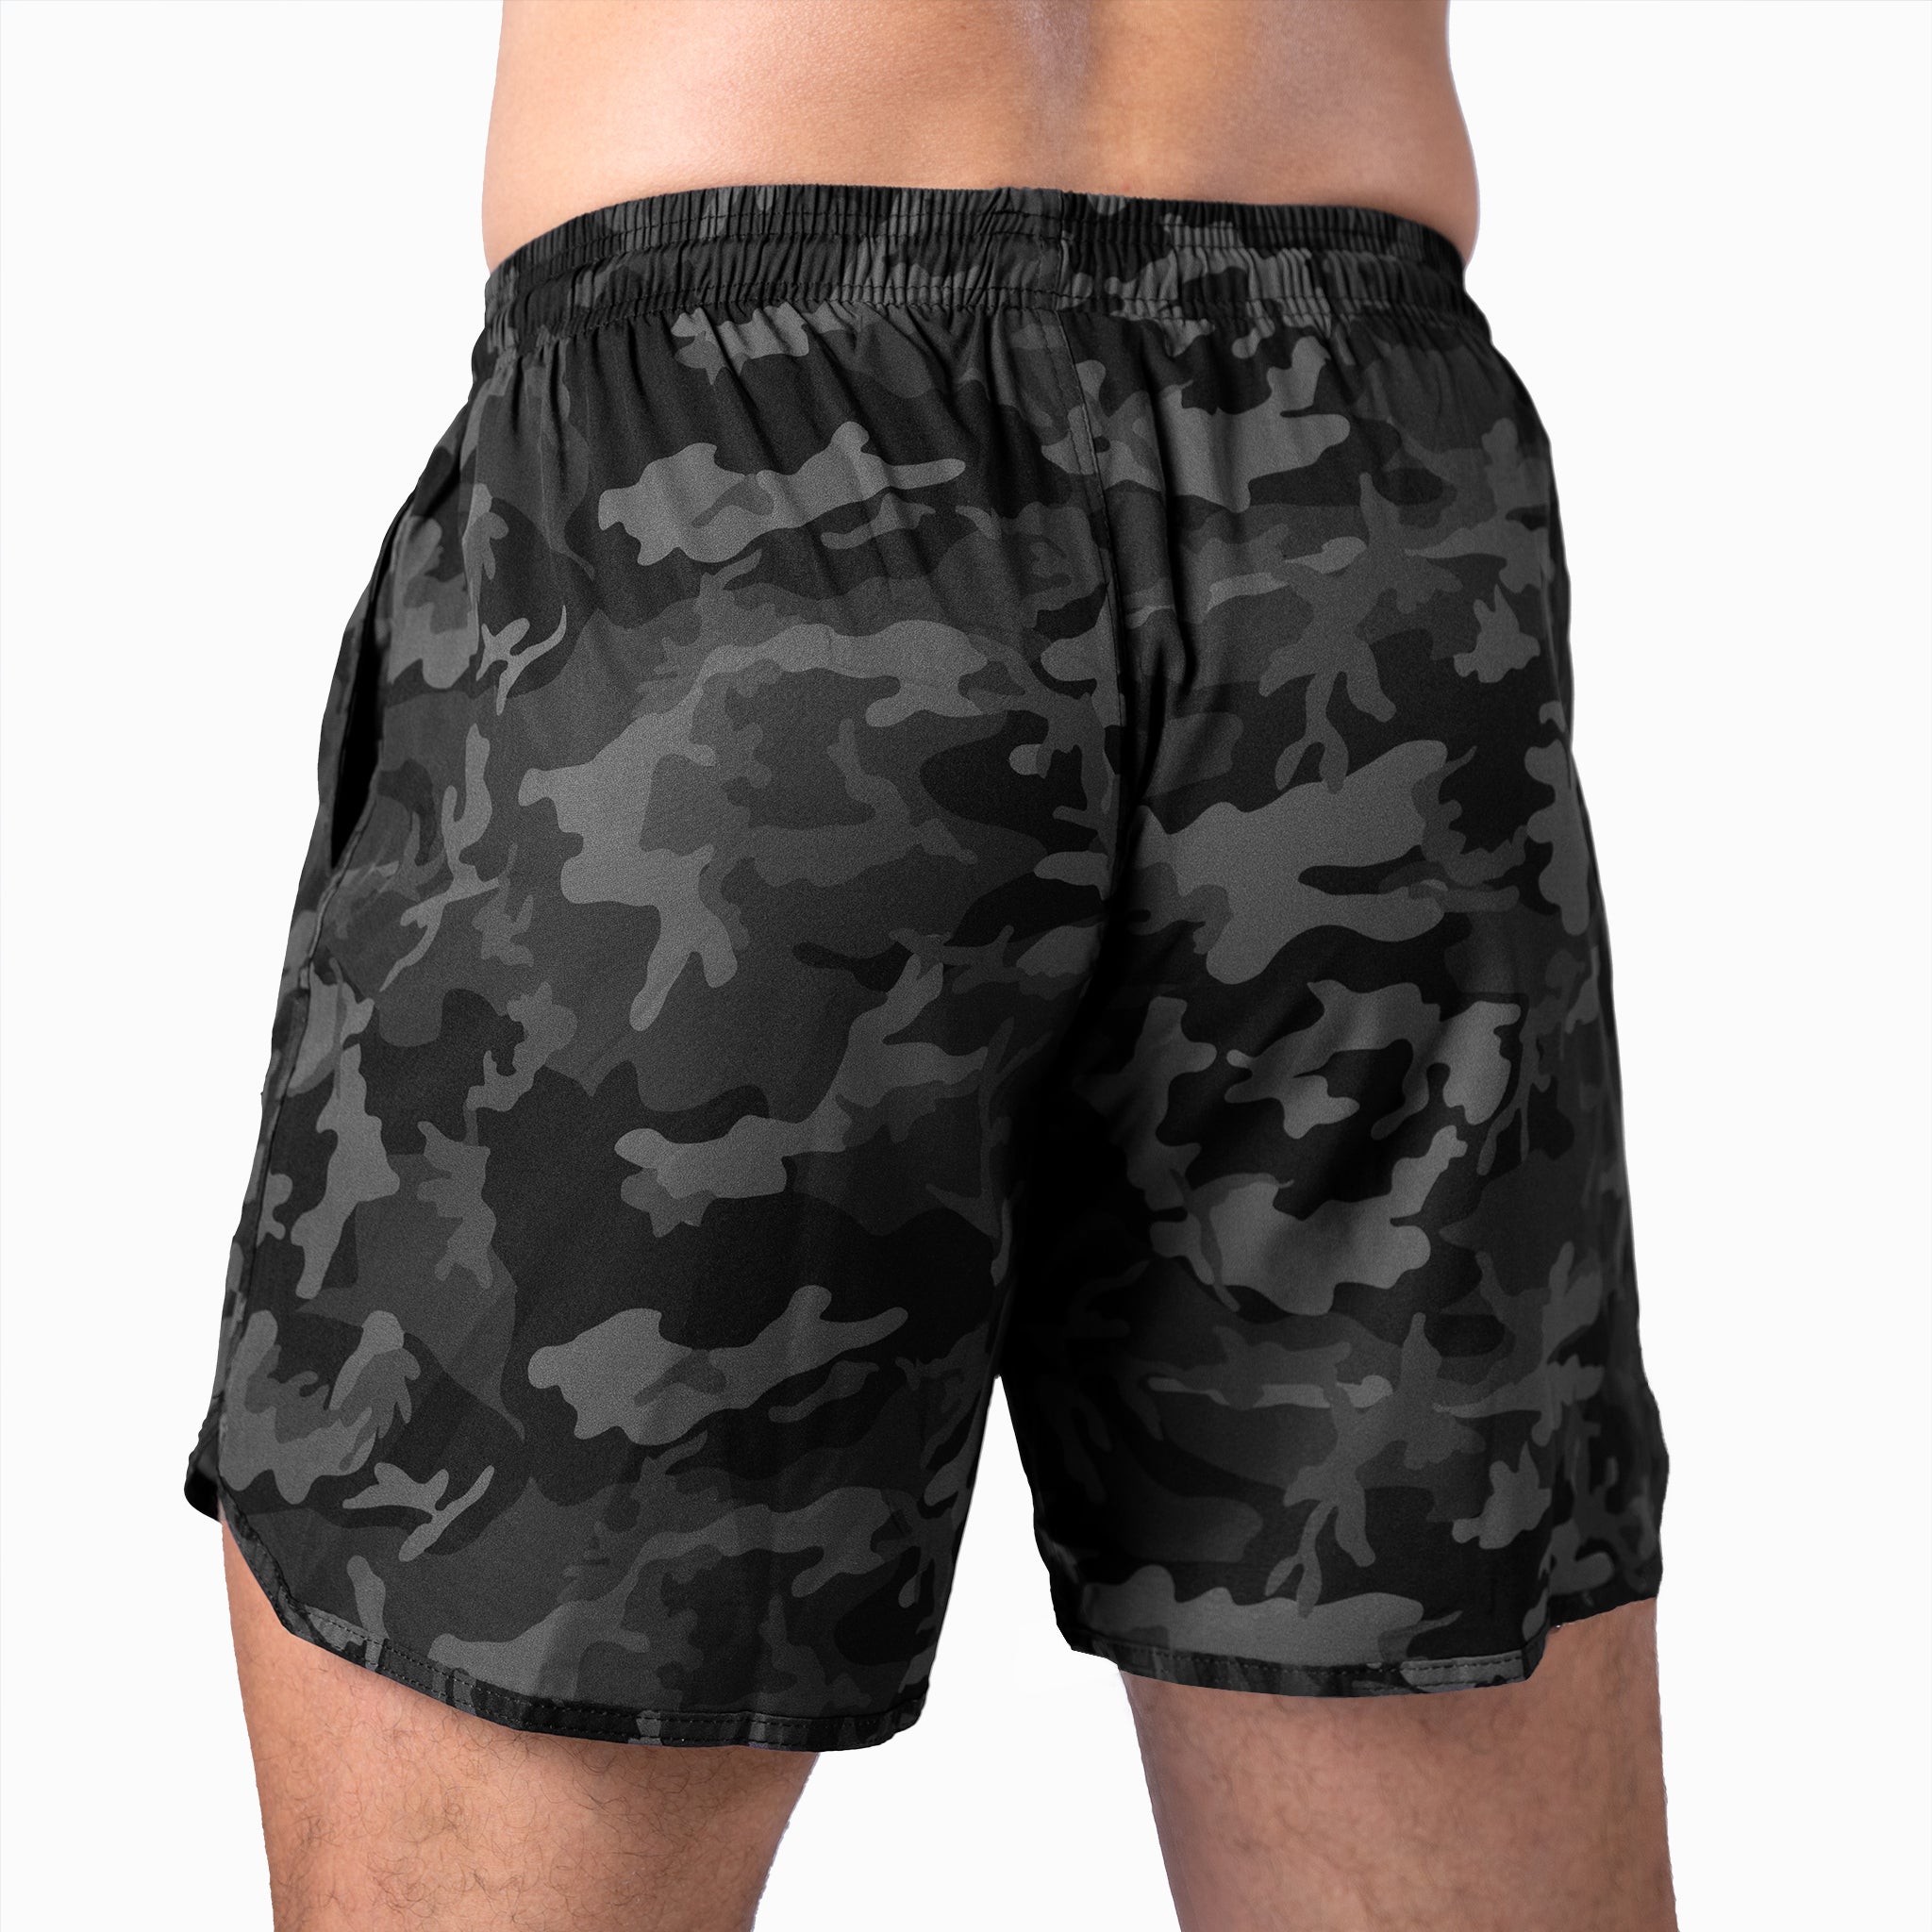 gr training shorts midnight camo cropped rear new